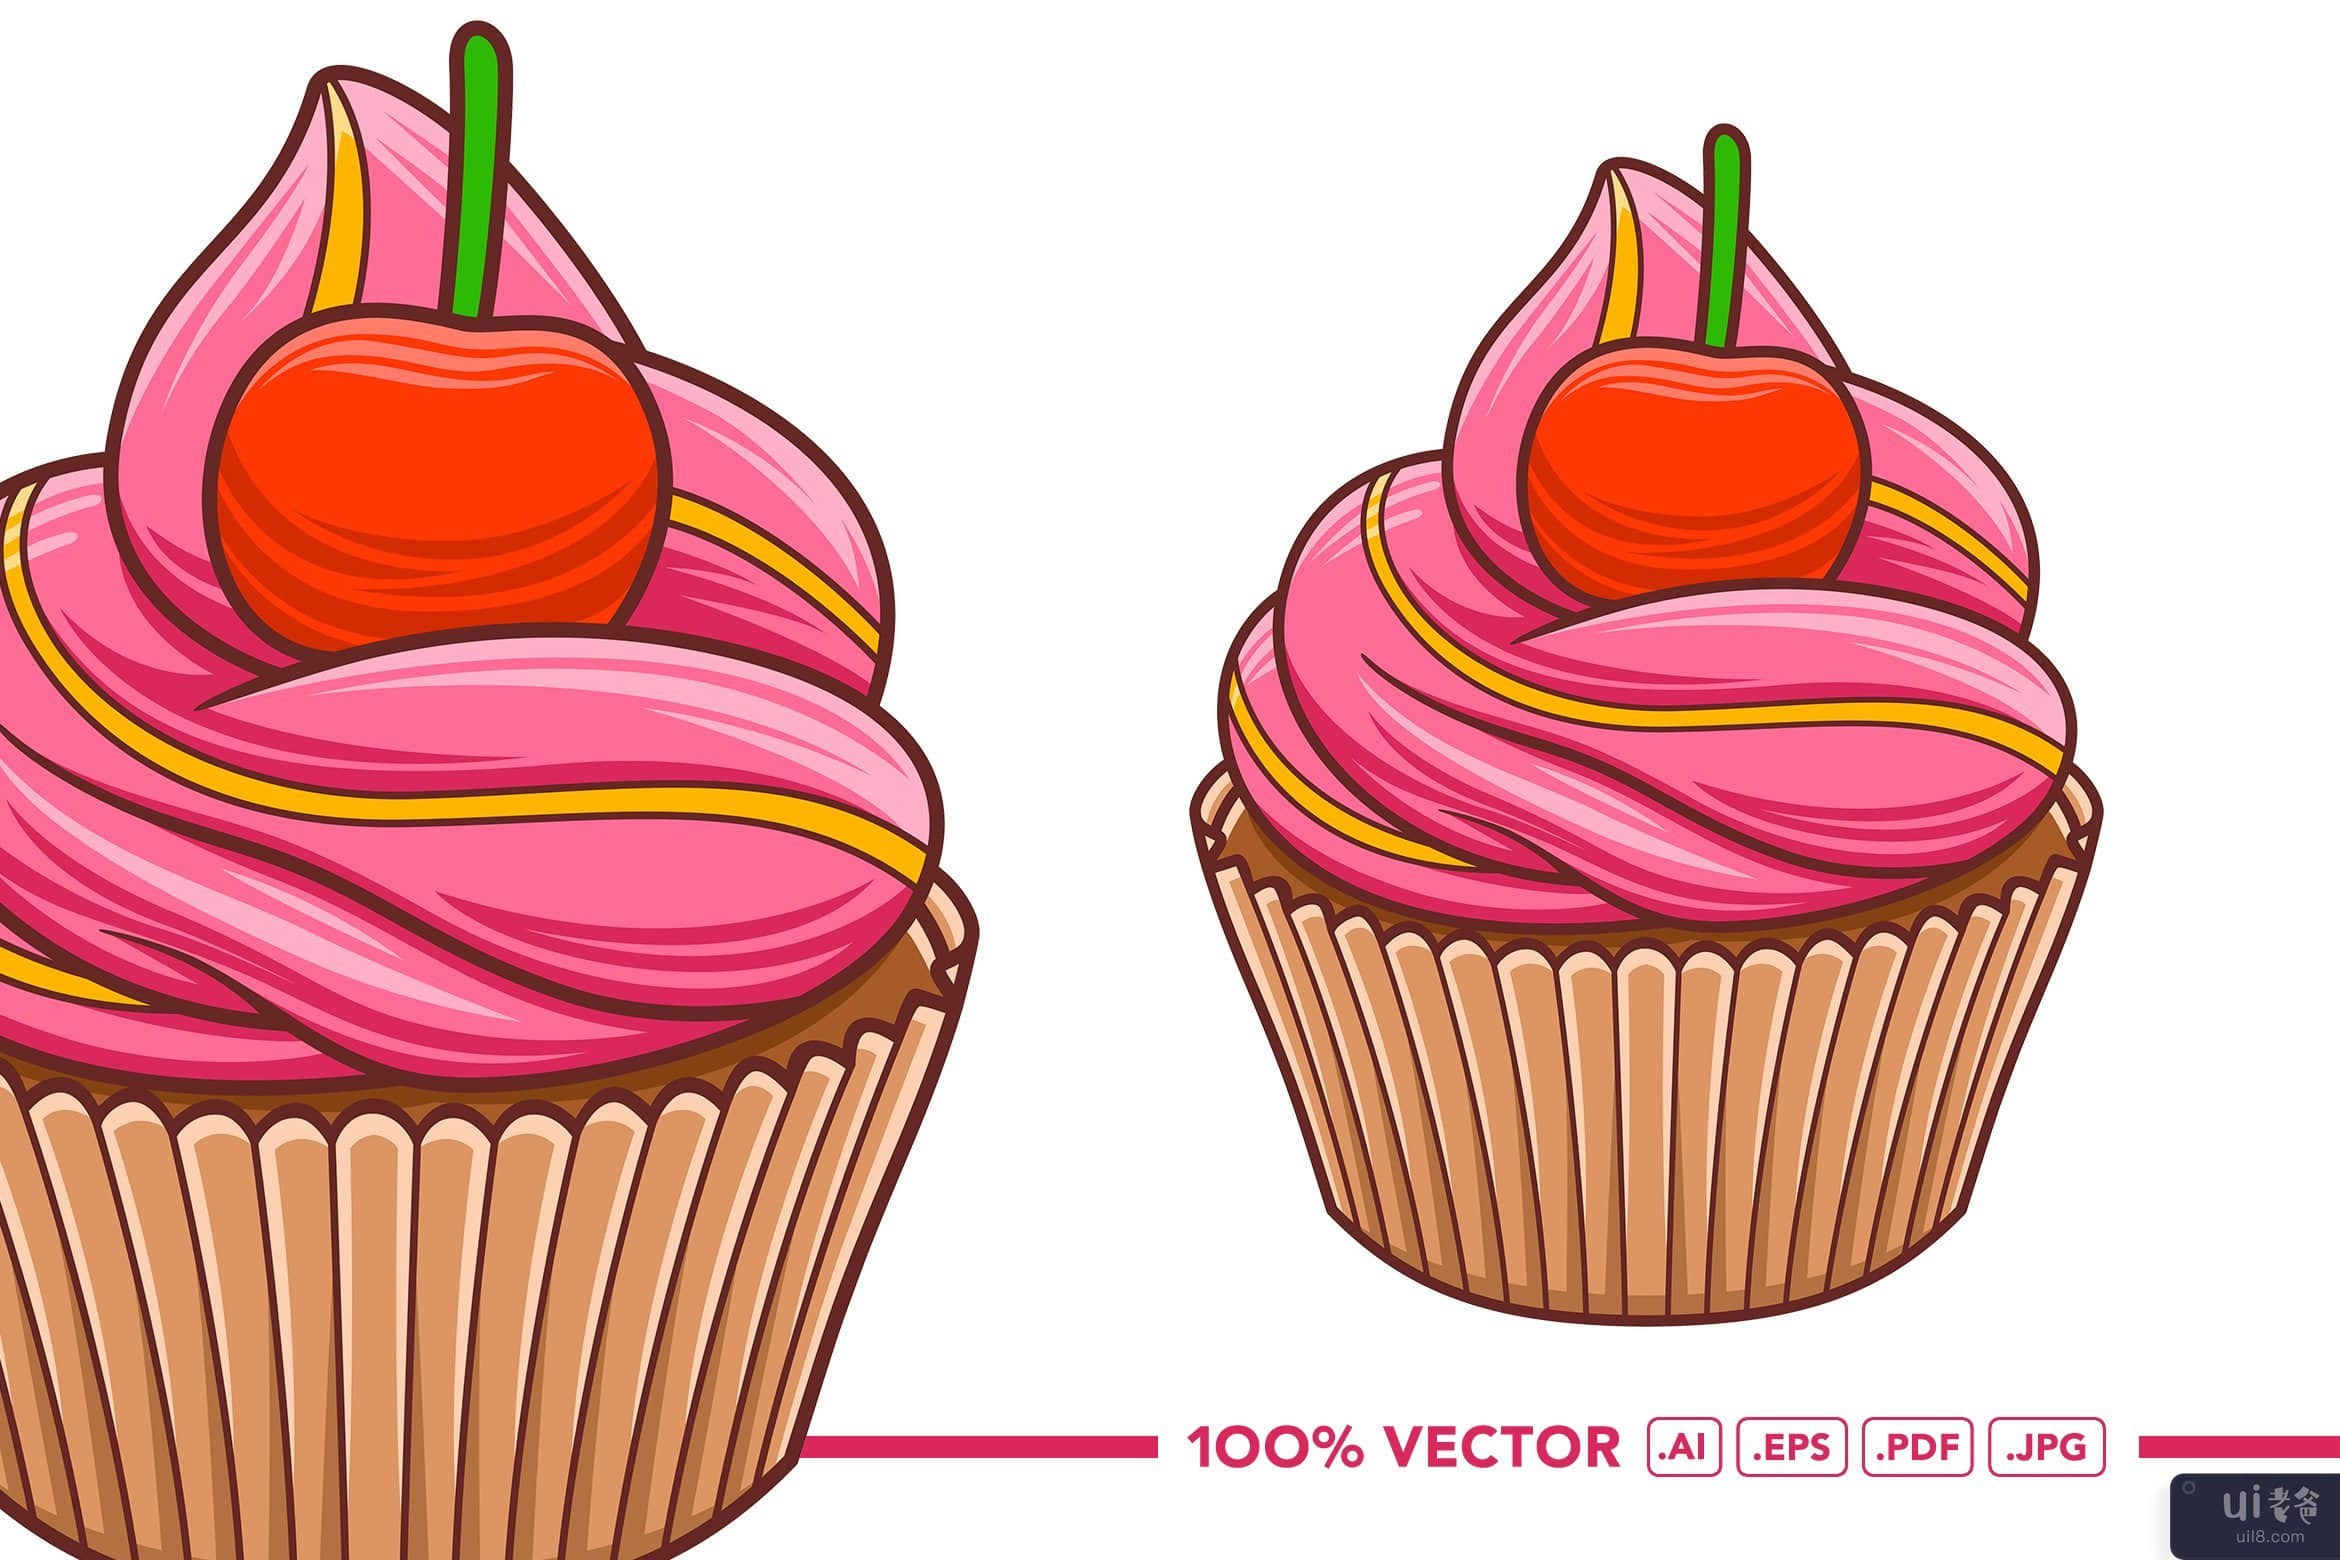 平面设计风格的杯子蛋糕矢量(Cup Cakes Vector in Flat Design Style)插图2